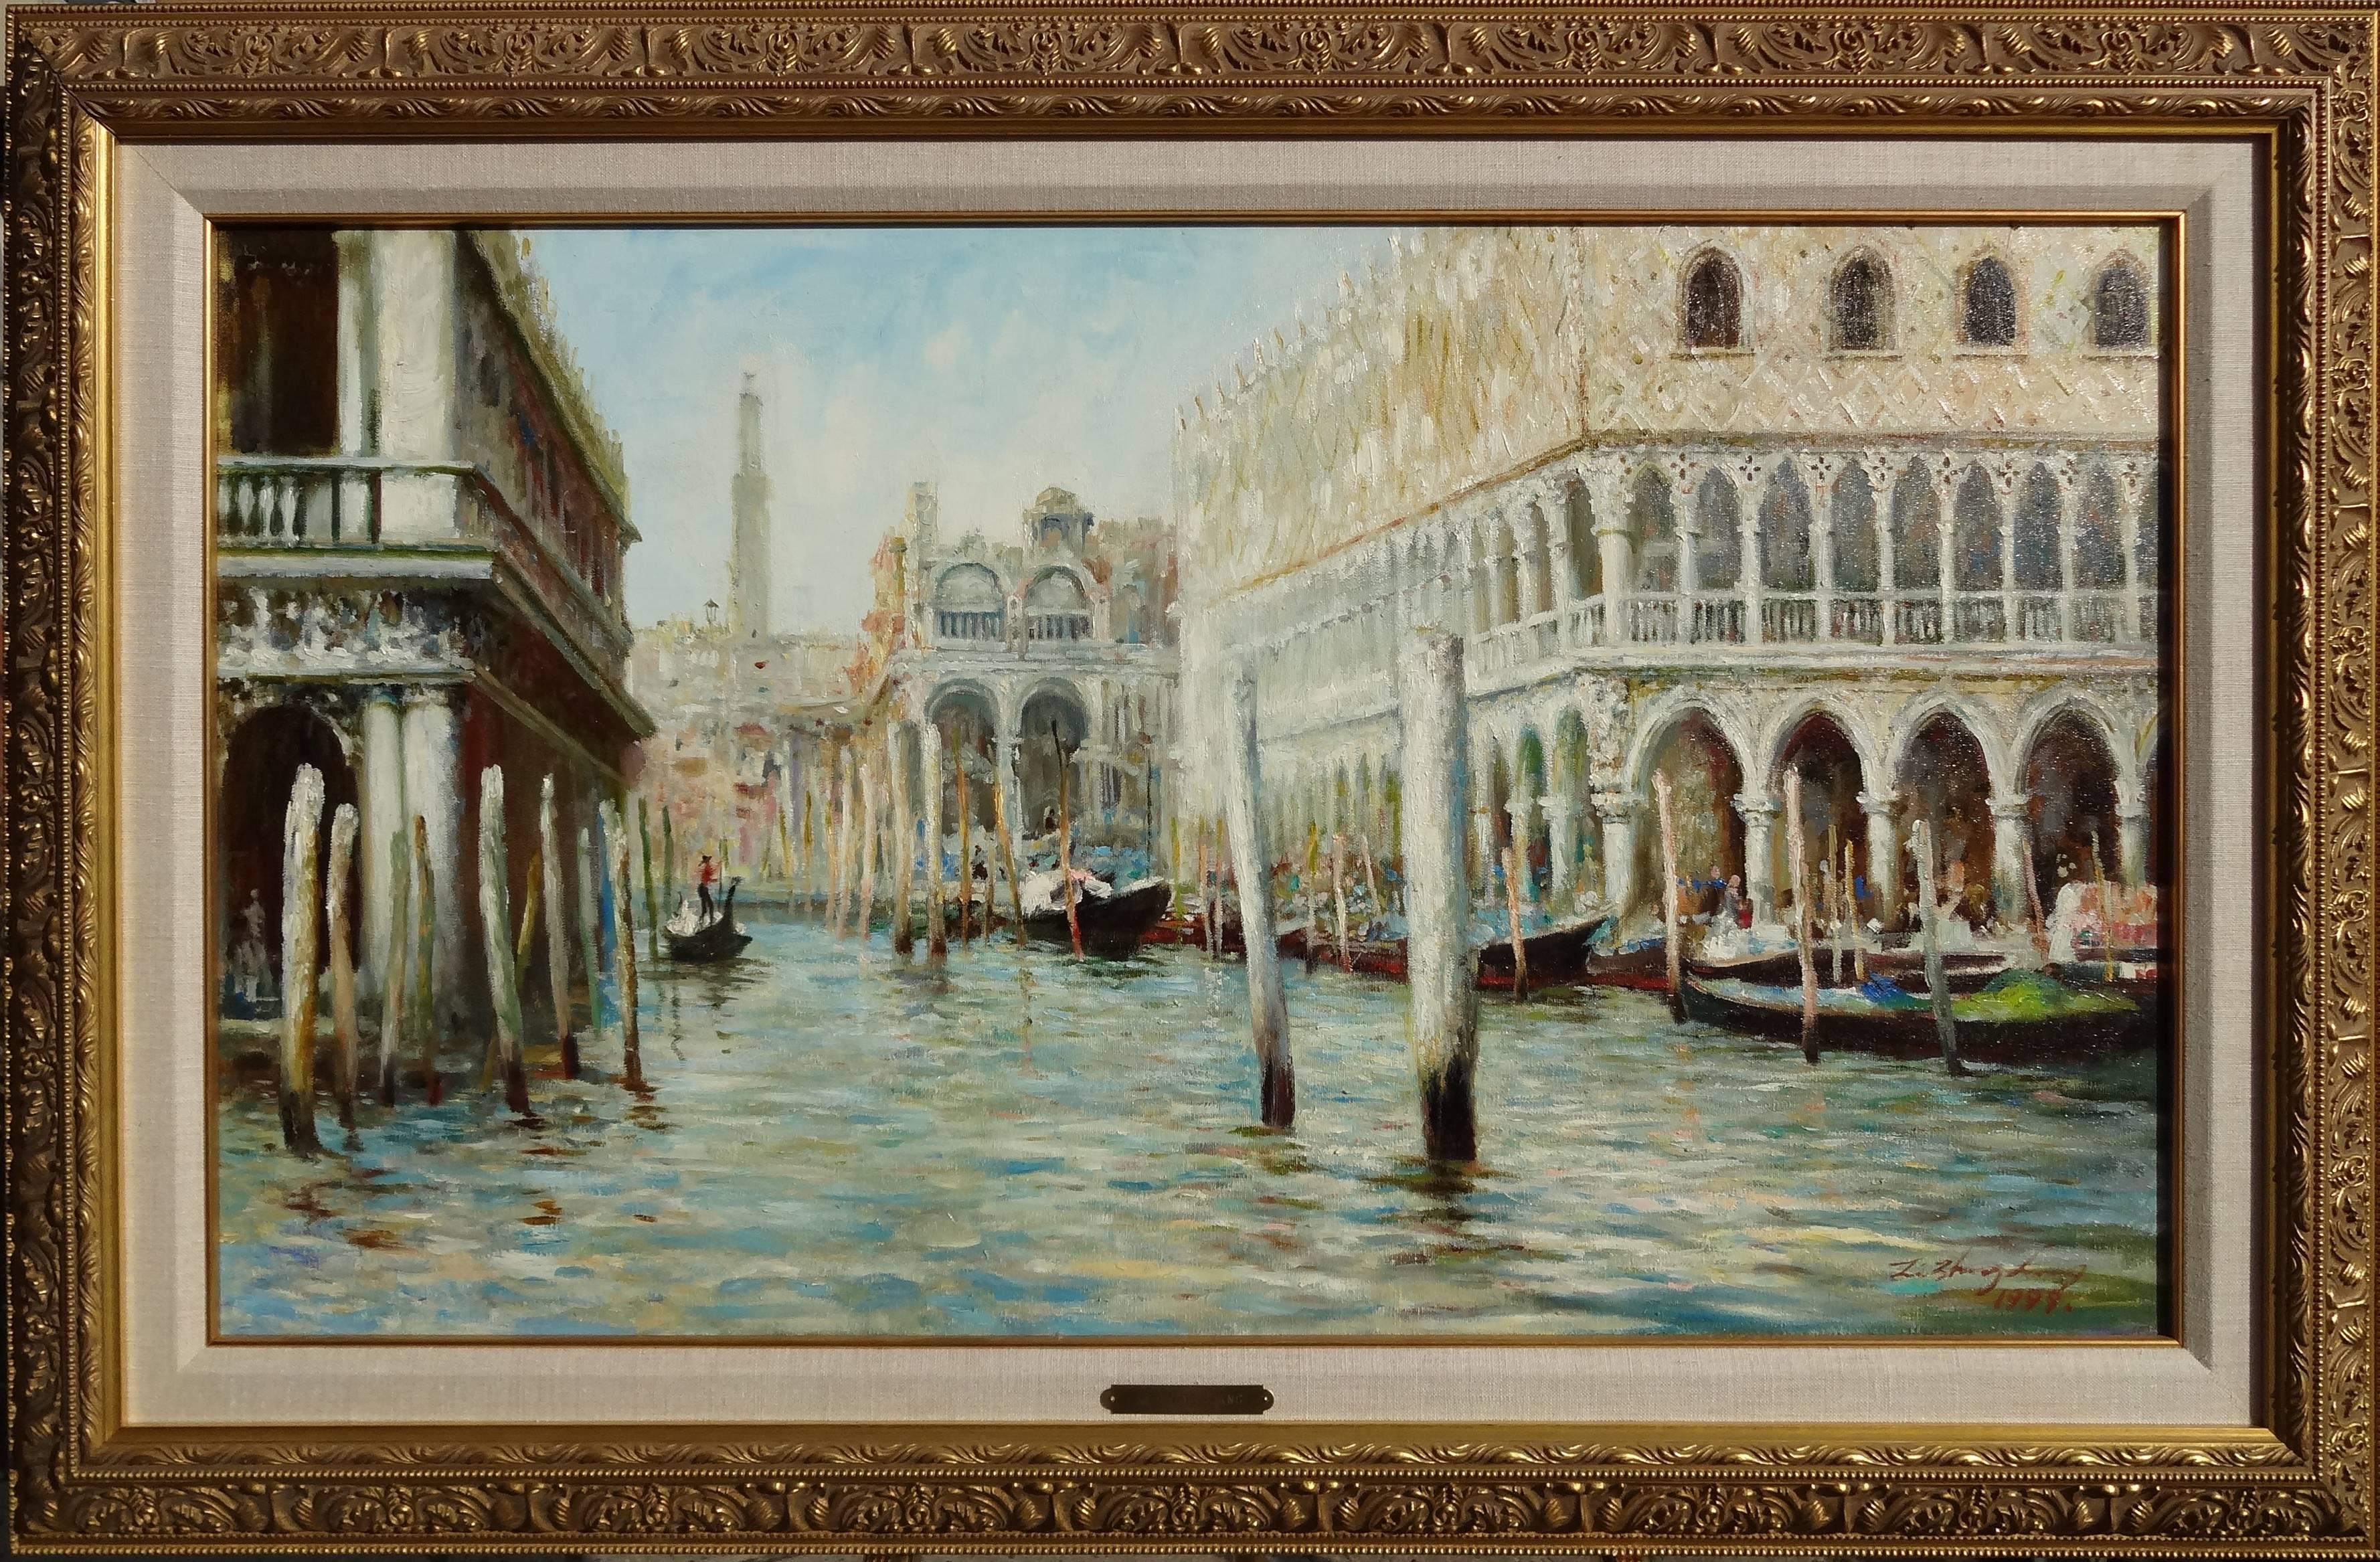 Venice Canal - Painting by Li Zhong Liang